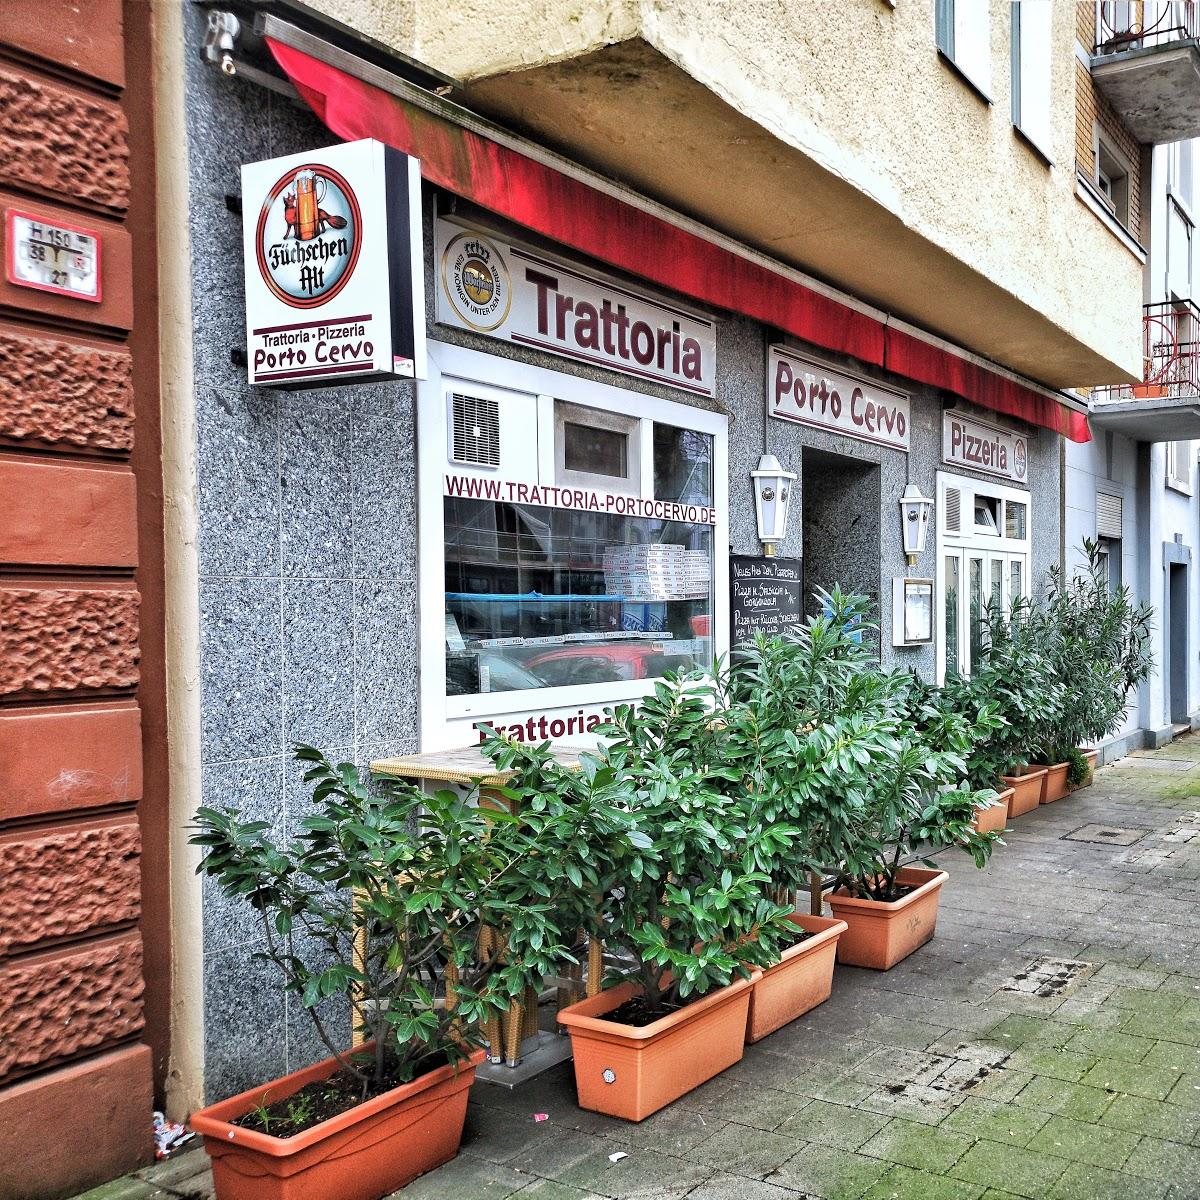 Restaurant "Trattoria Porto Cervo" in Düsseldorf